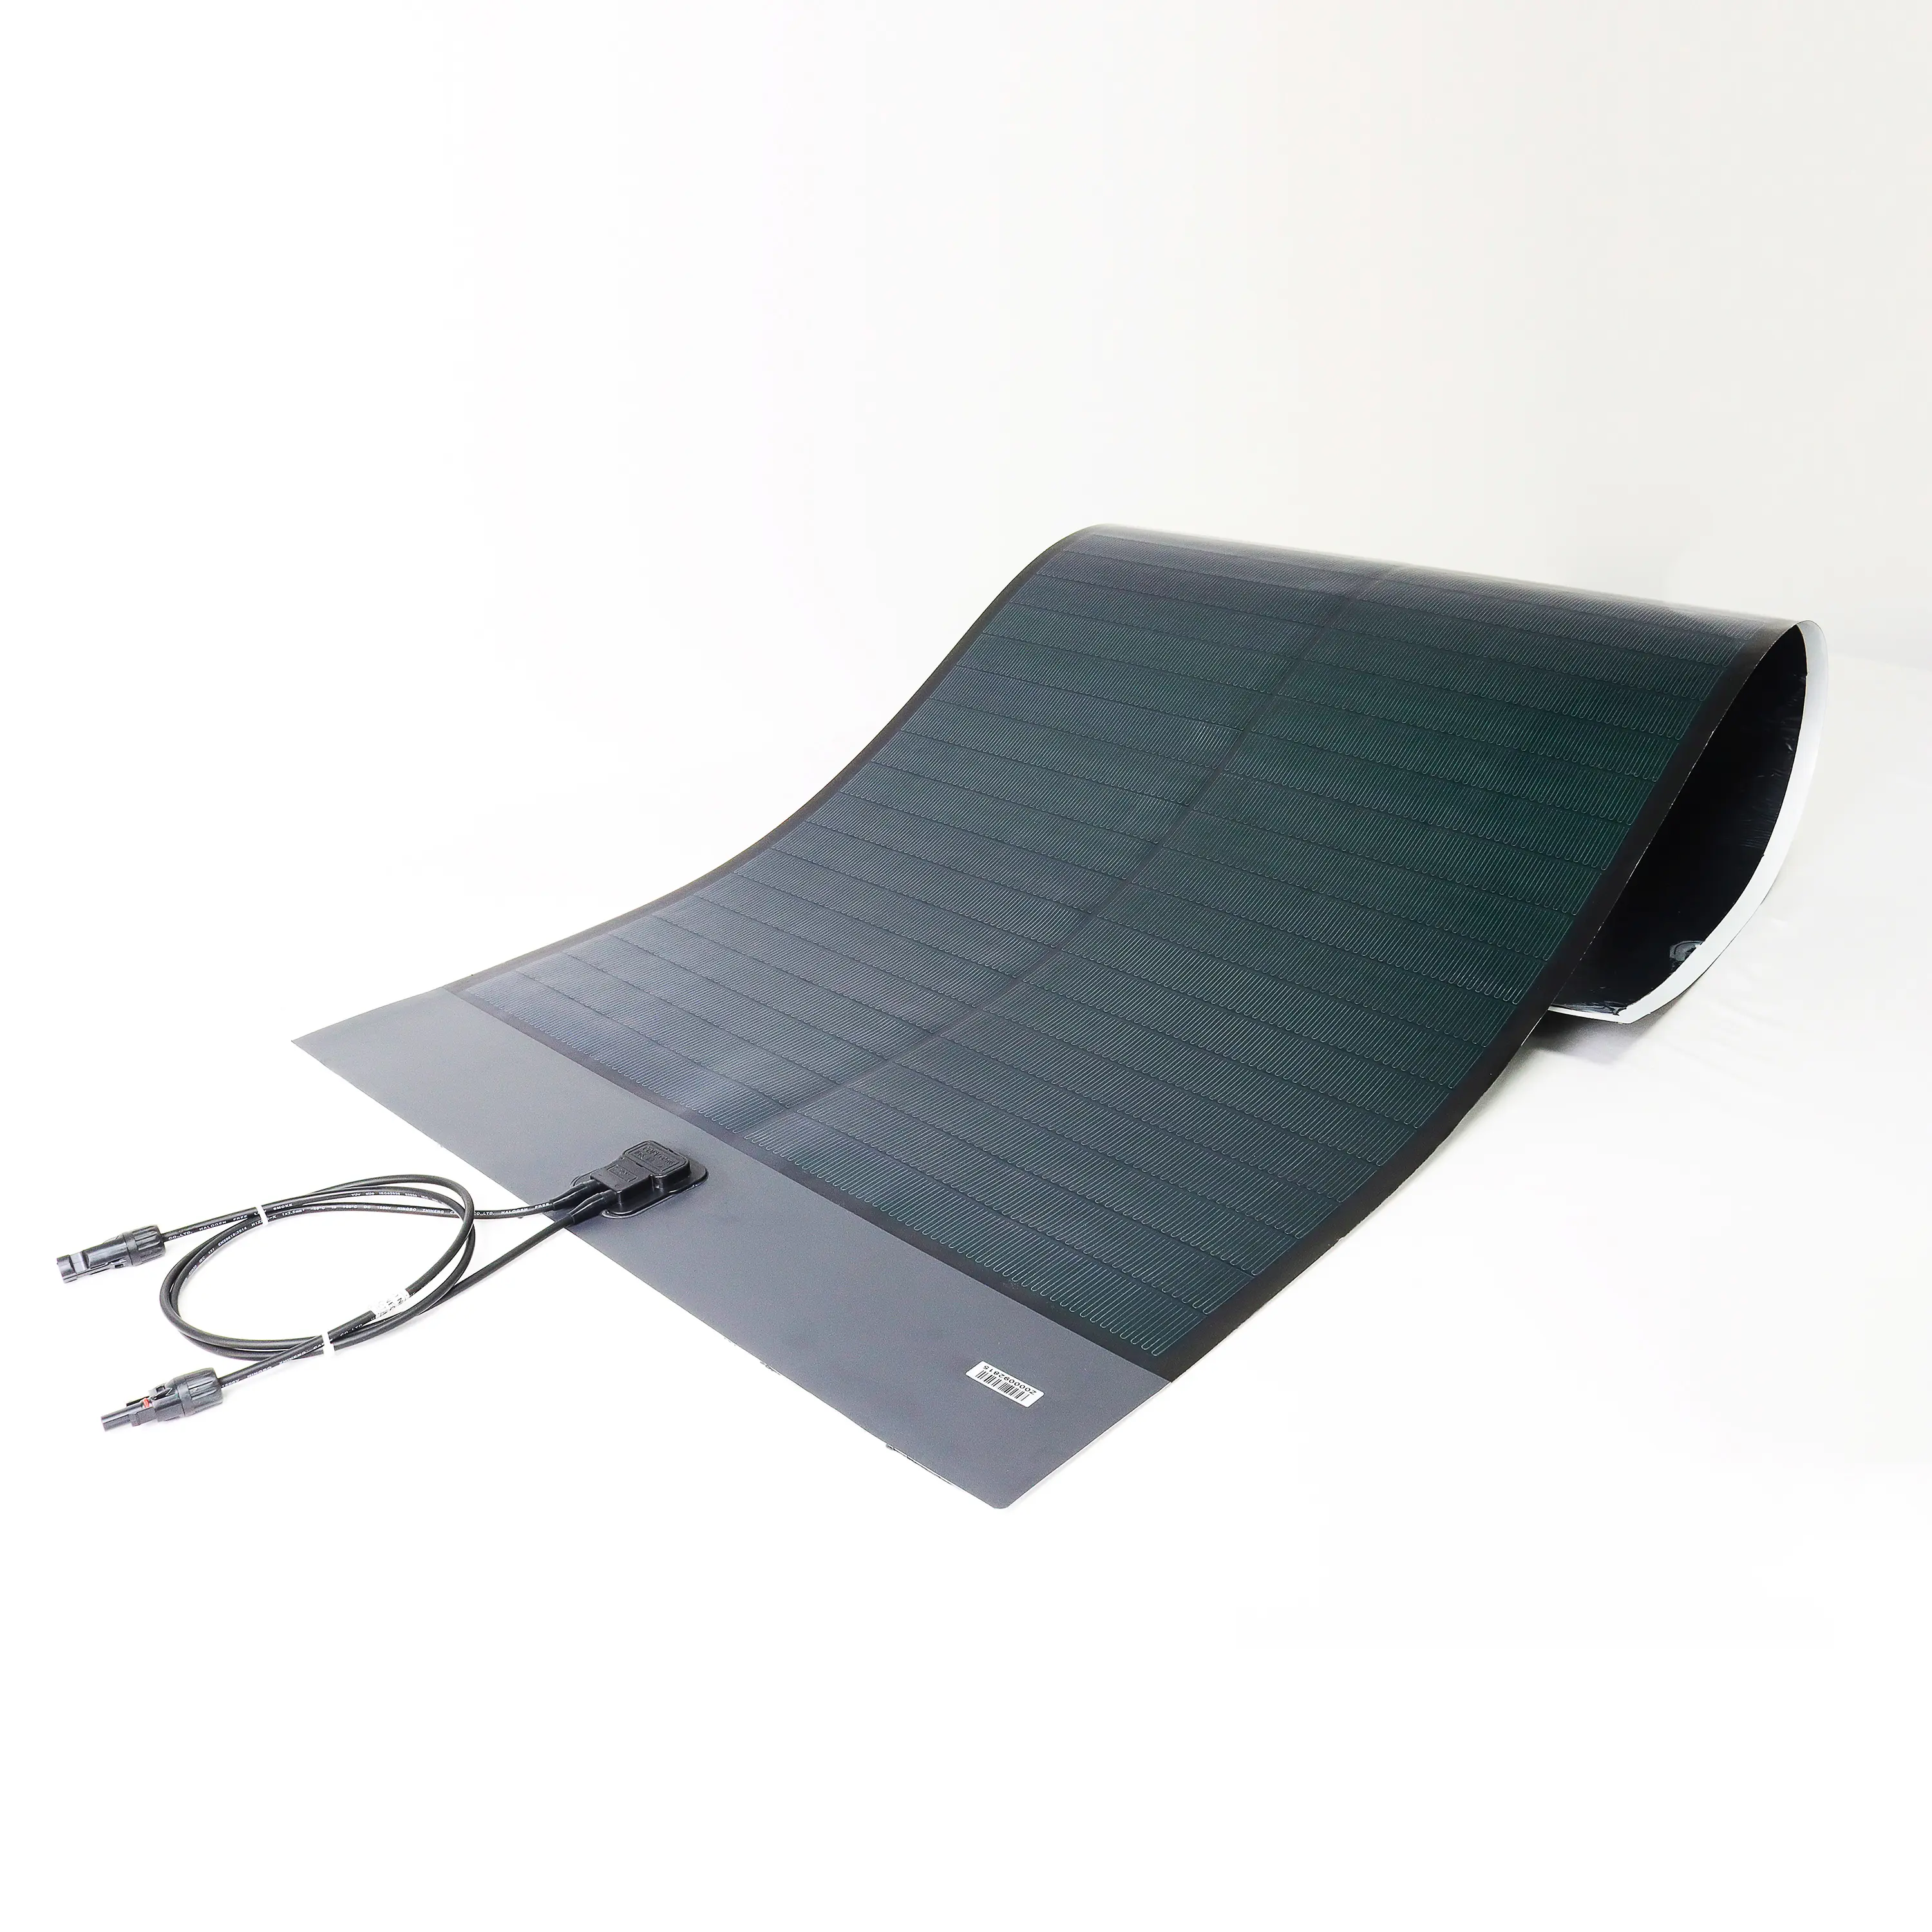 160W CIGS thin film solar flexible panel for multi-use like solar car boat RV camping